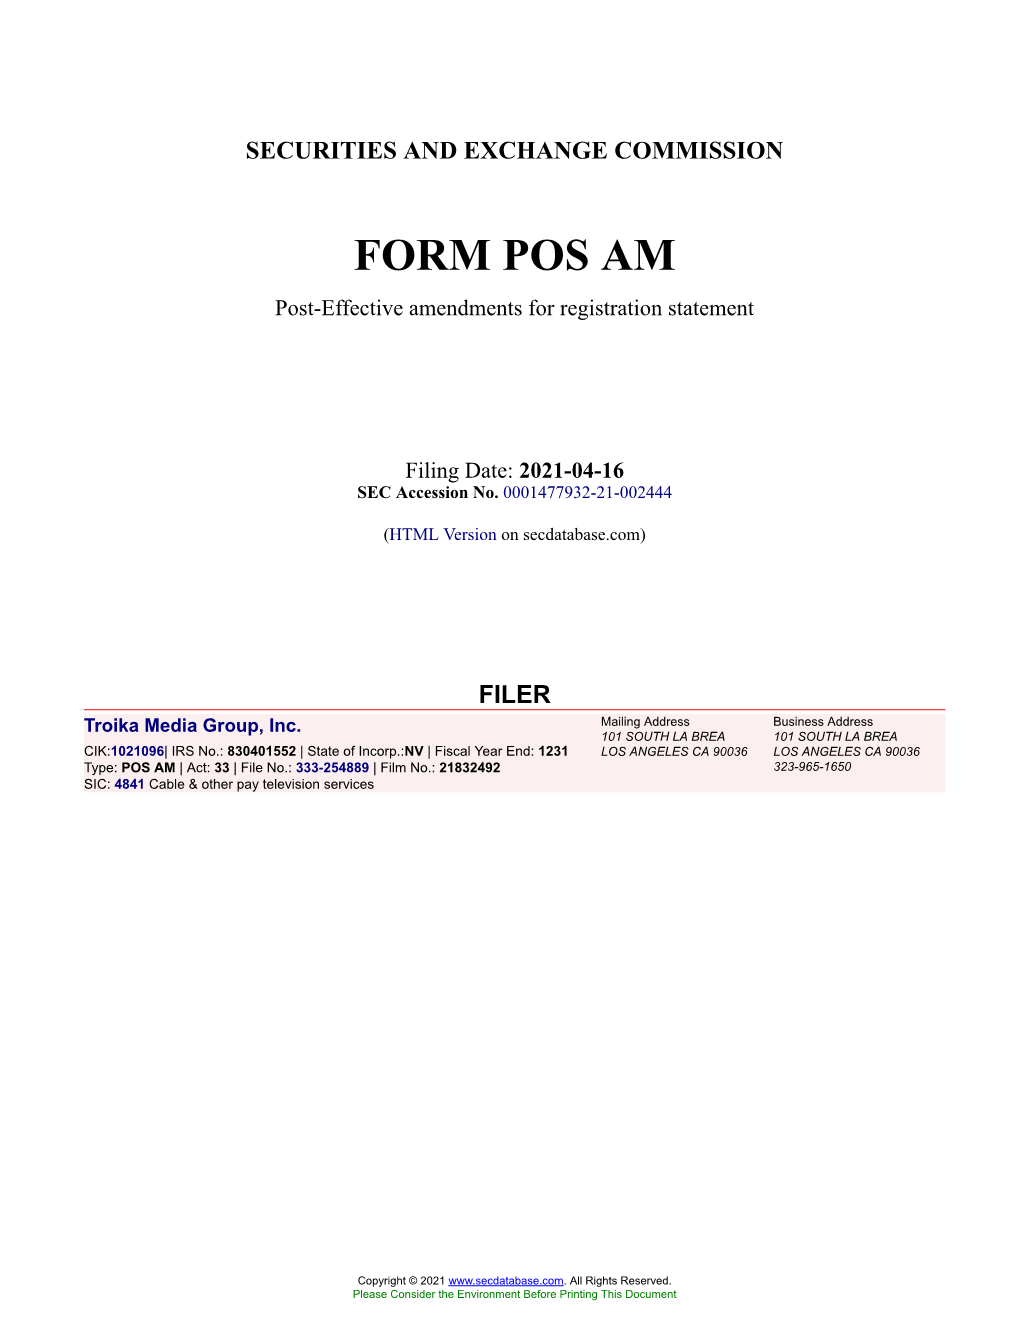 Troika Media Group, Inc. Form POS AM Filed 2021-04-16